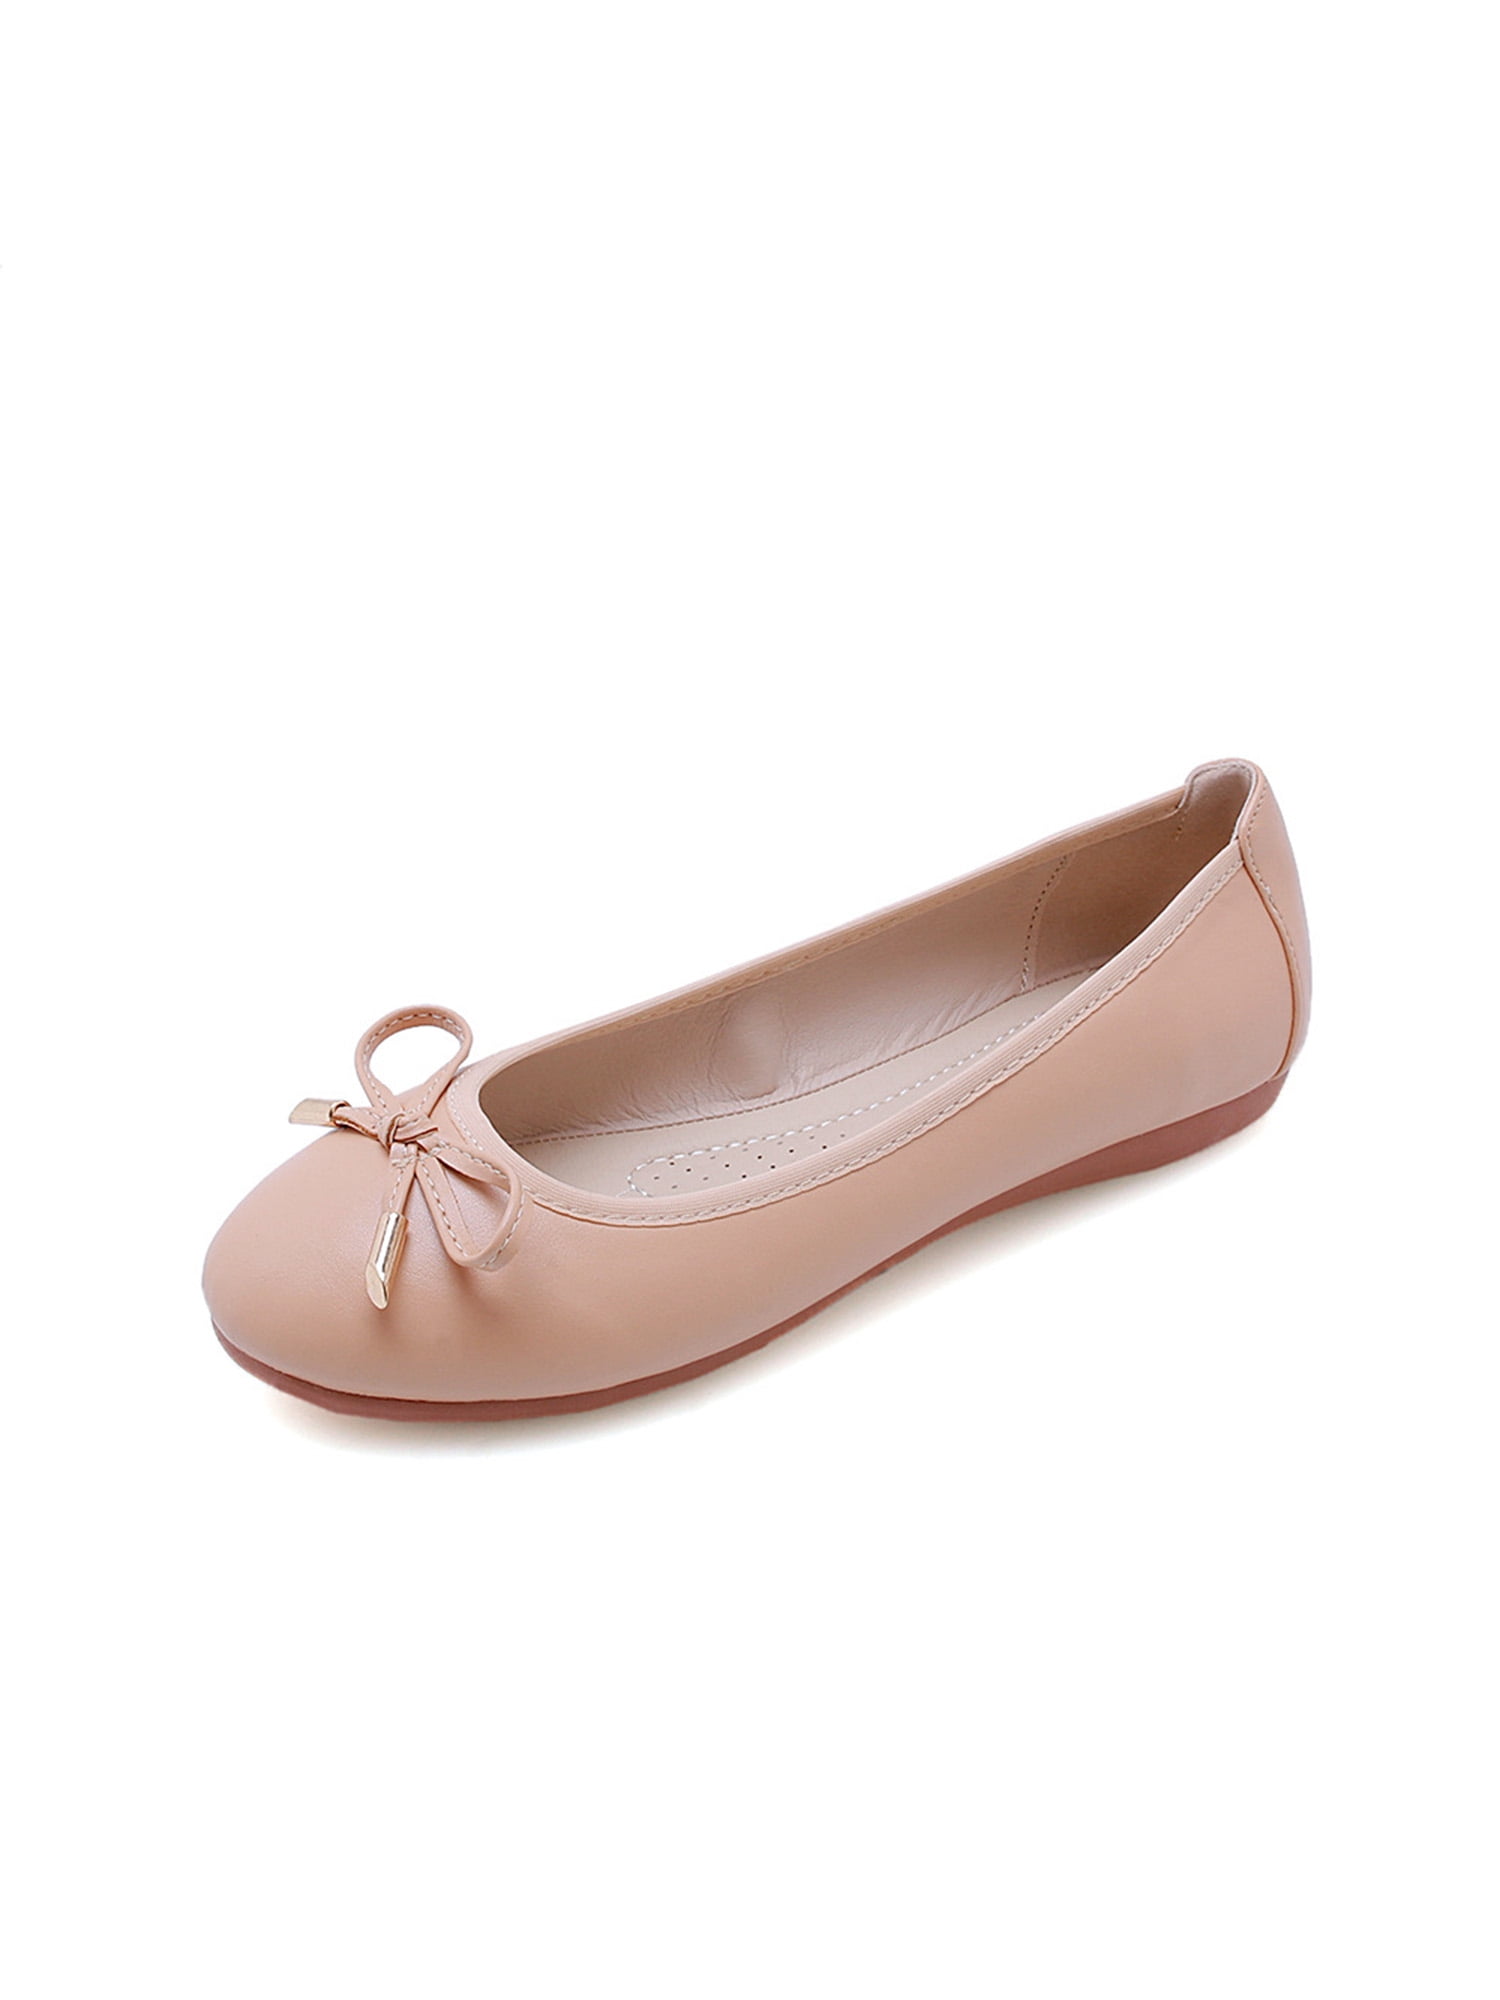 UK Womens Dolly Pumps Girls Flat Floral Summer Slip On Ballerina Loafer's Shoes 